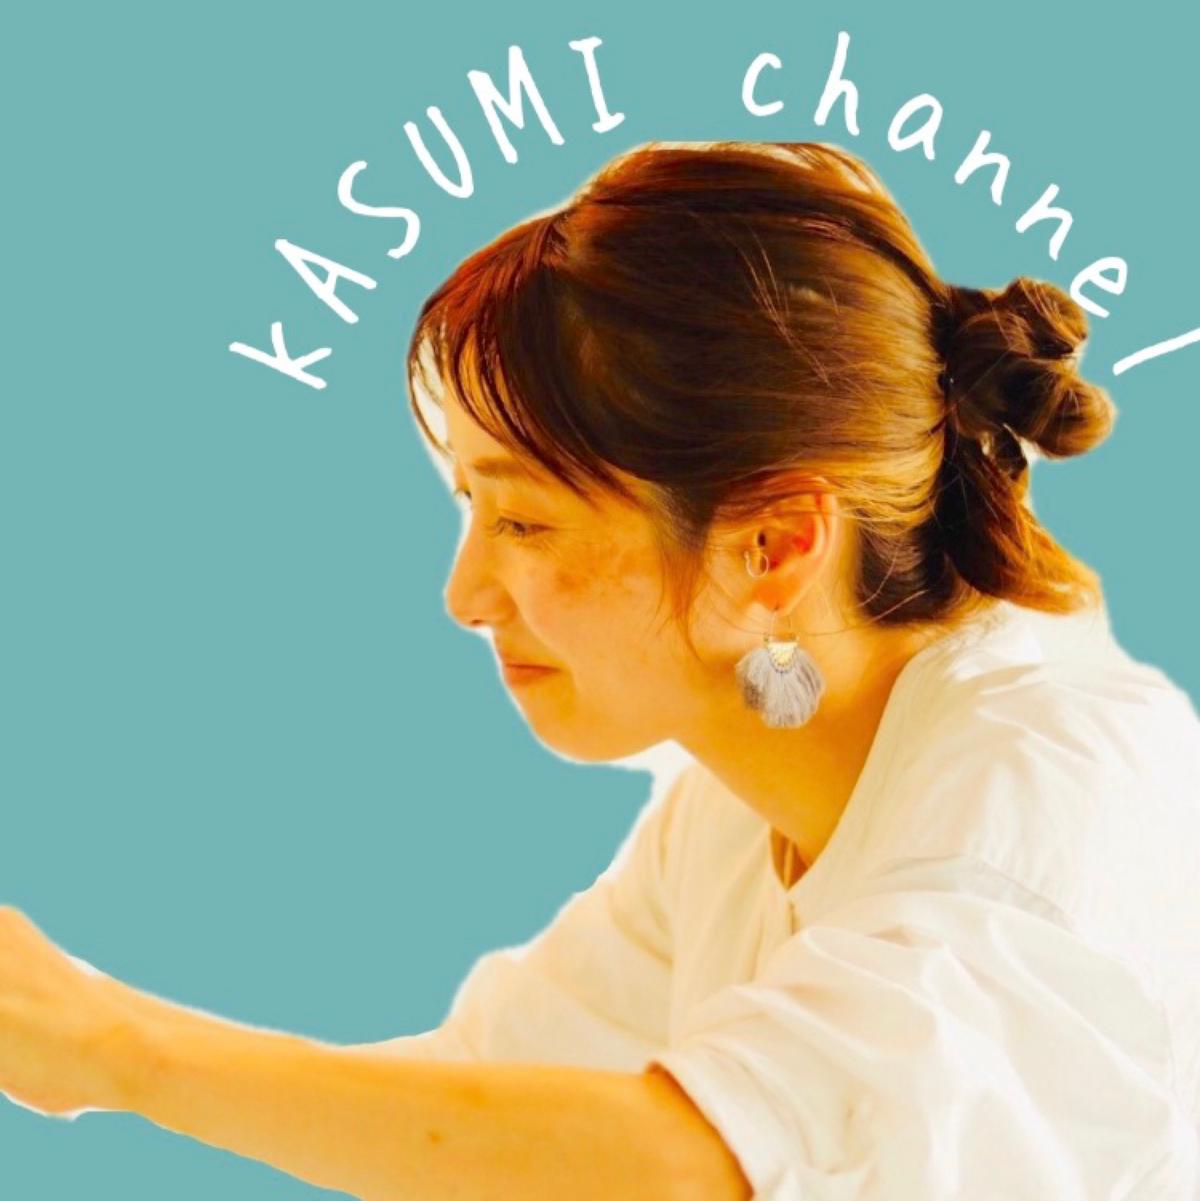 kasumi channel